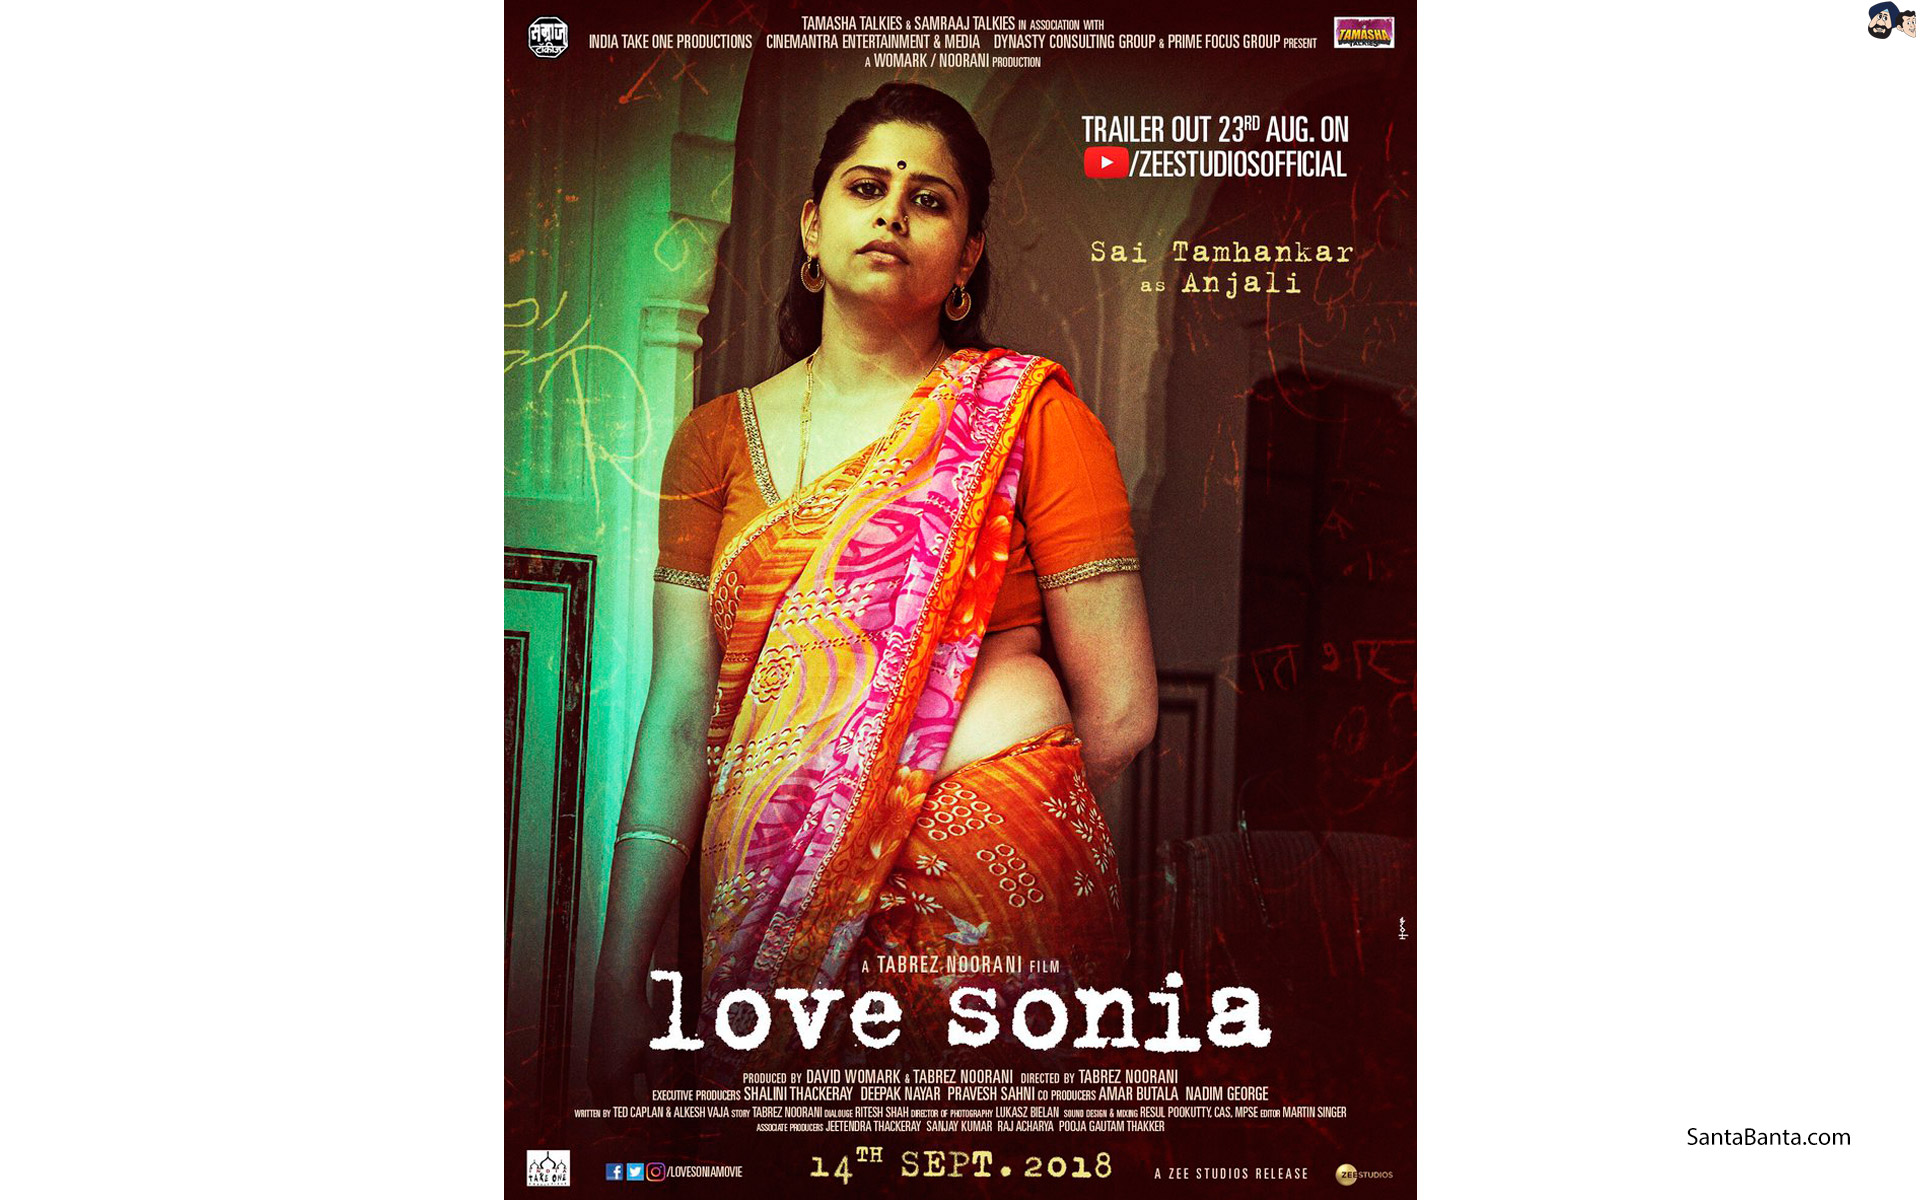 Sai Tamhankar As Anjali In Love Sonia - Sai Tamhankar Love Sonia , HD Wallpaper & Backgrounds